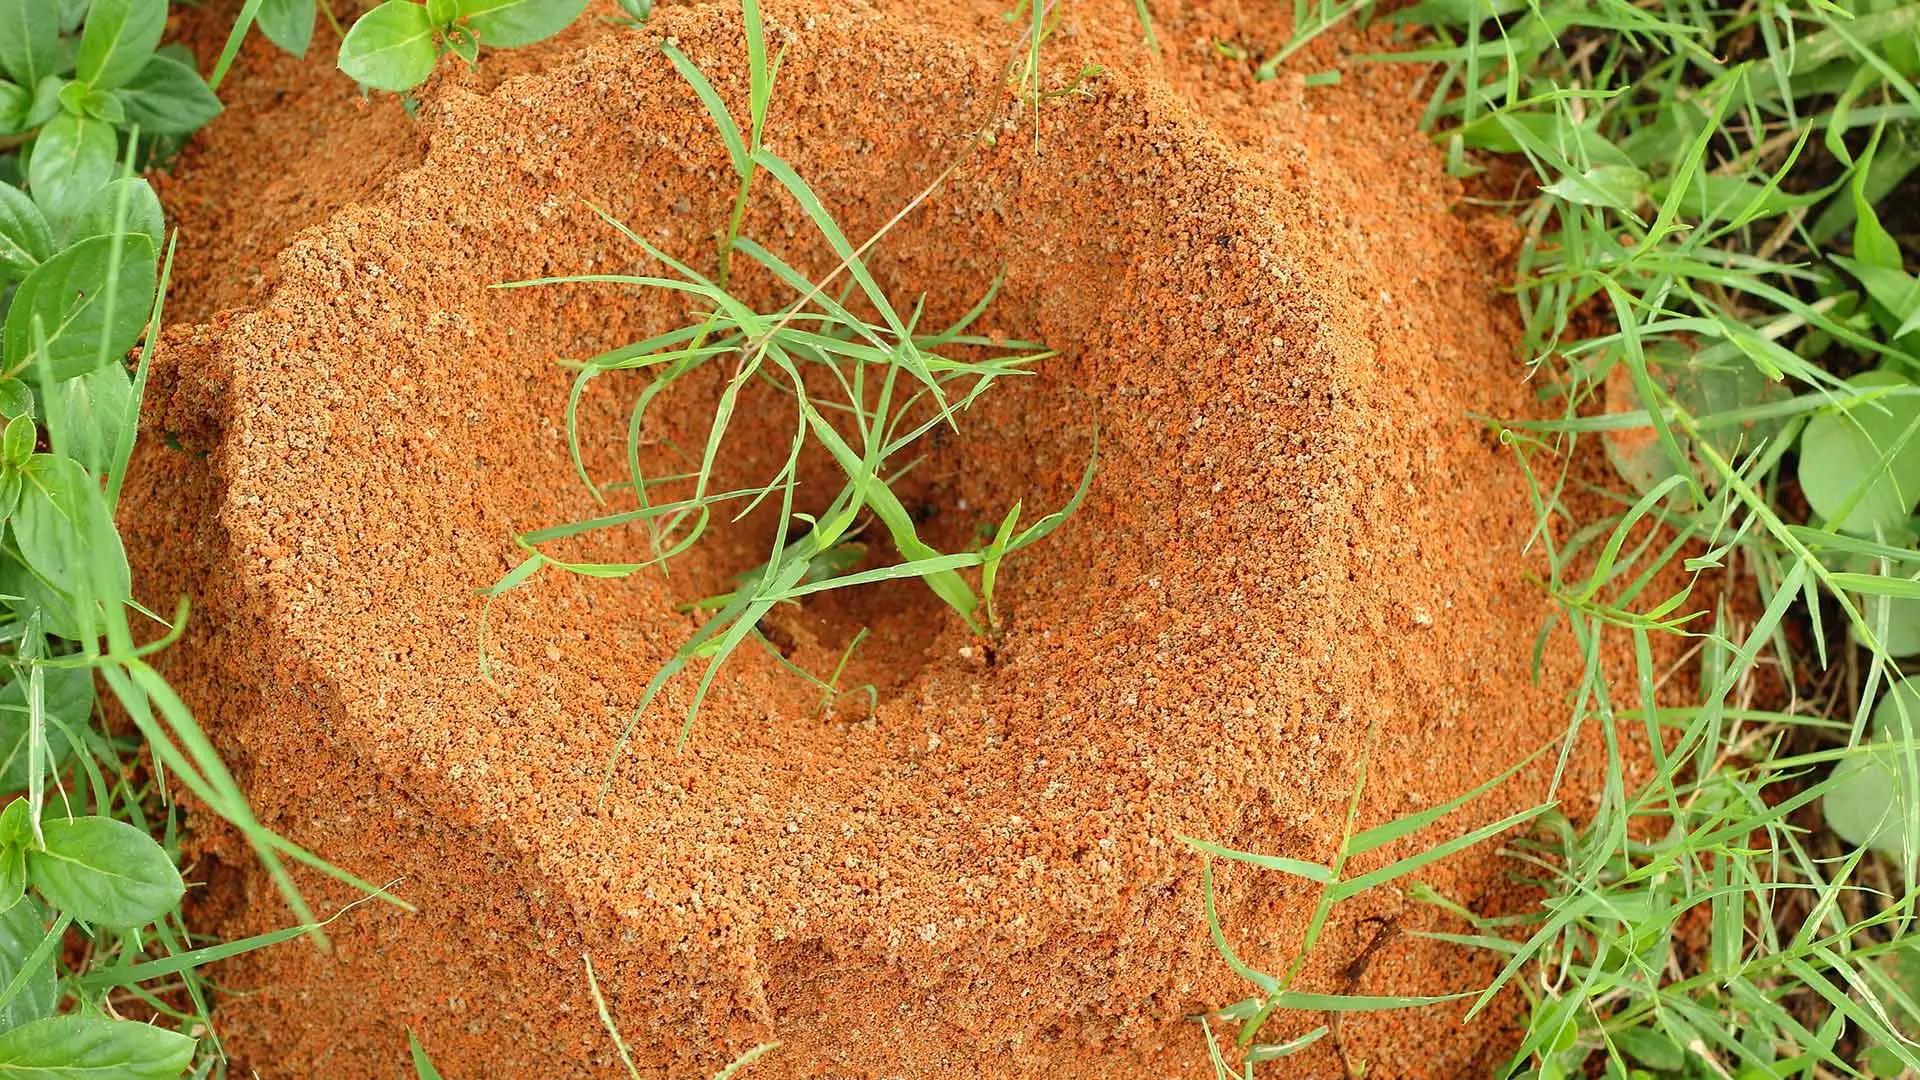 Large mound of fire ants near Oakland, TN.